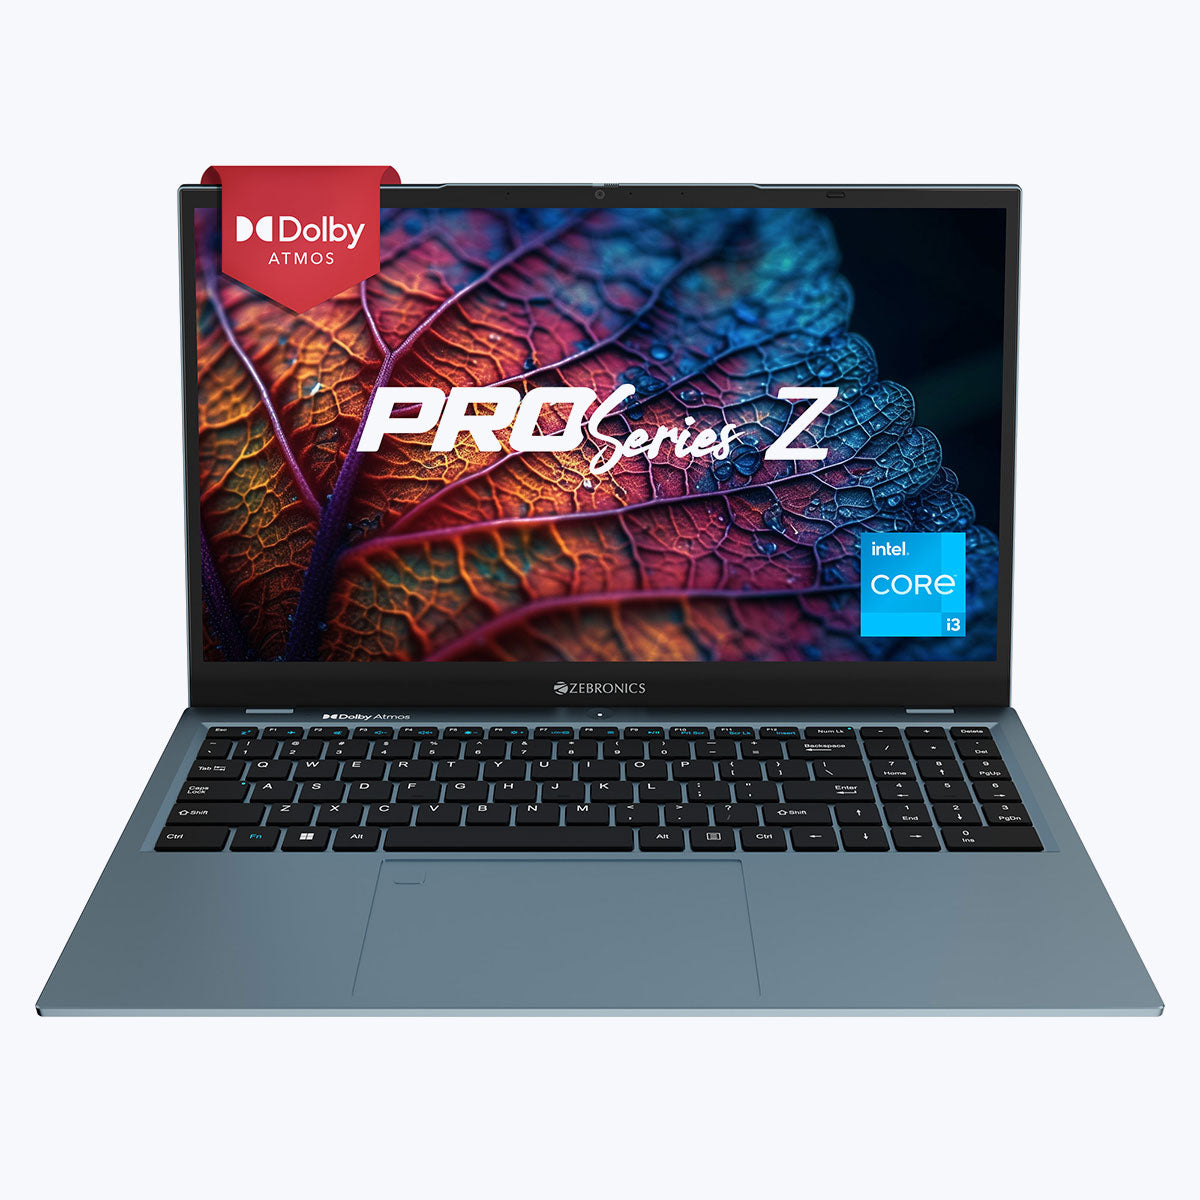 ZEB-NBC 3S - Pro Series Z Laptop - Zebronics